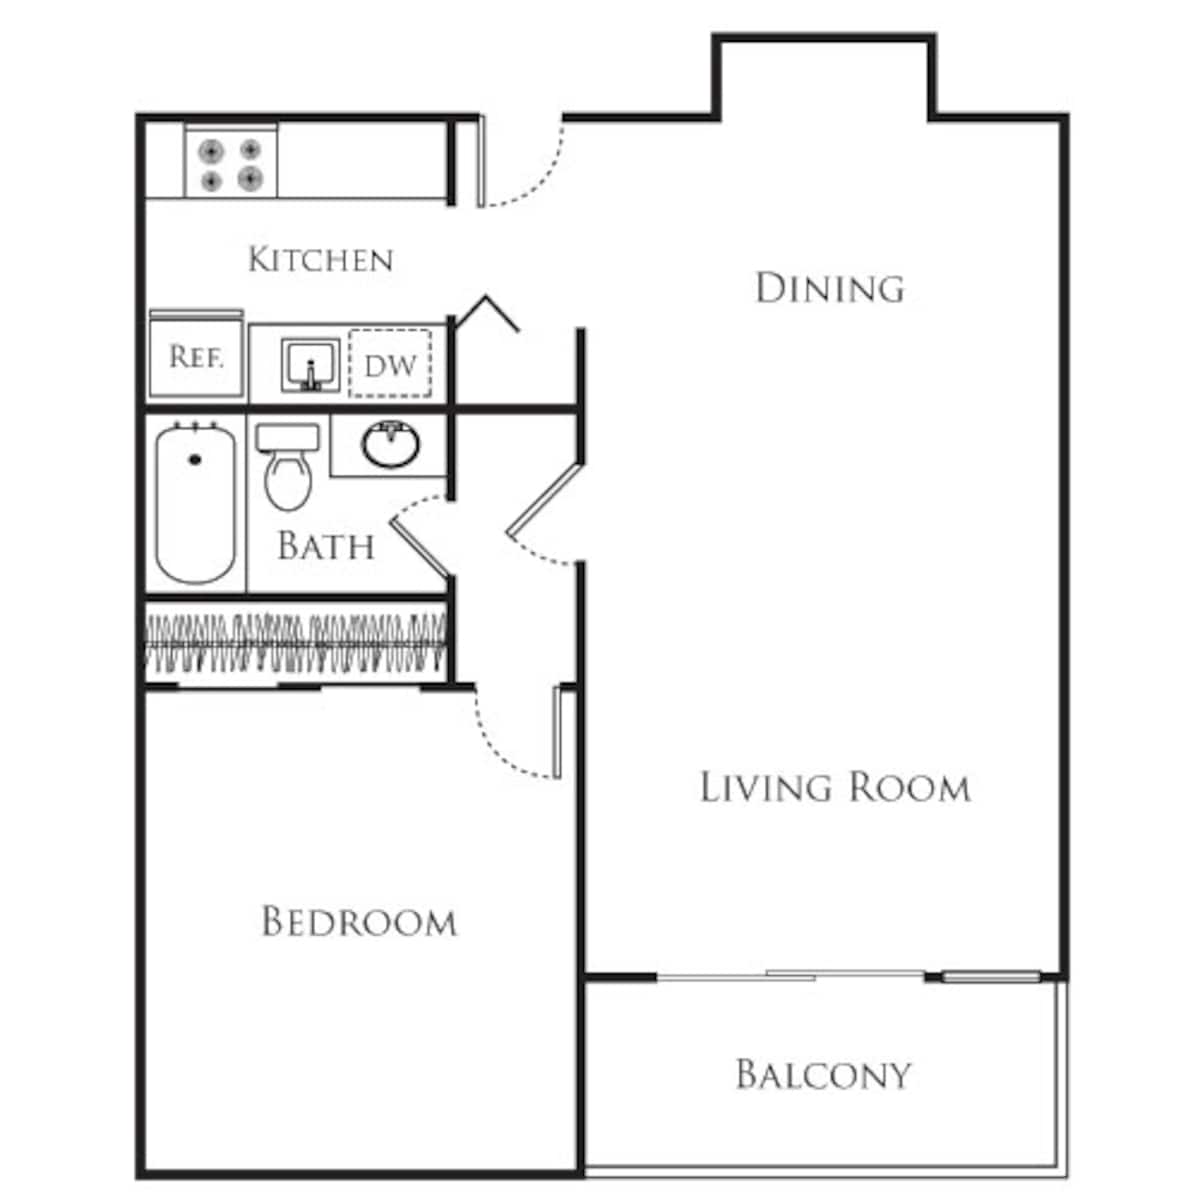 Floorplan diagram for 1 Bedroom Large, showing 1 bedroom